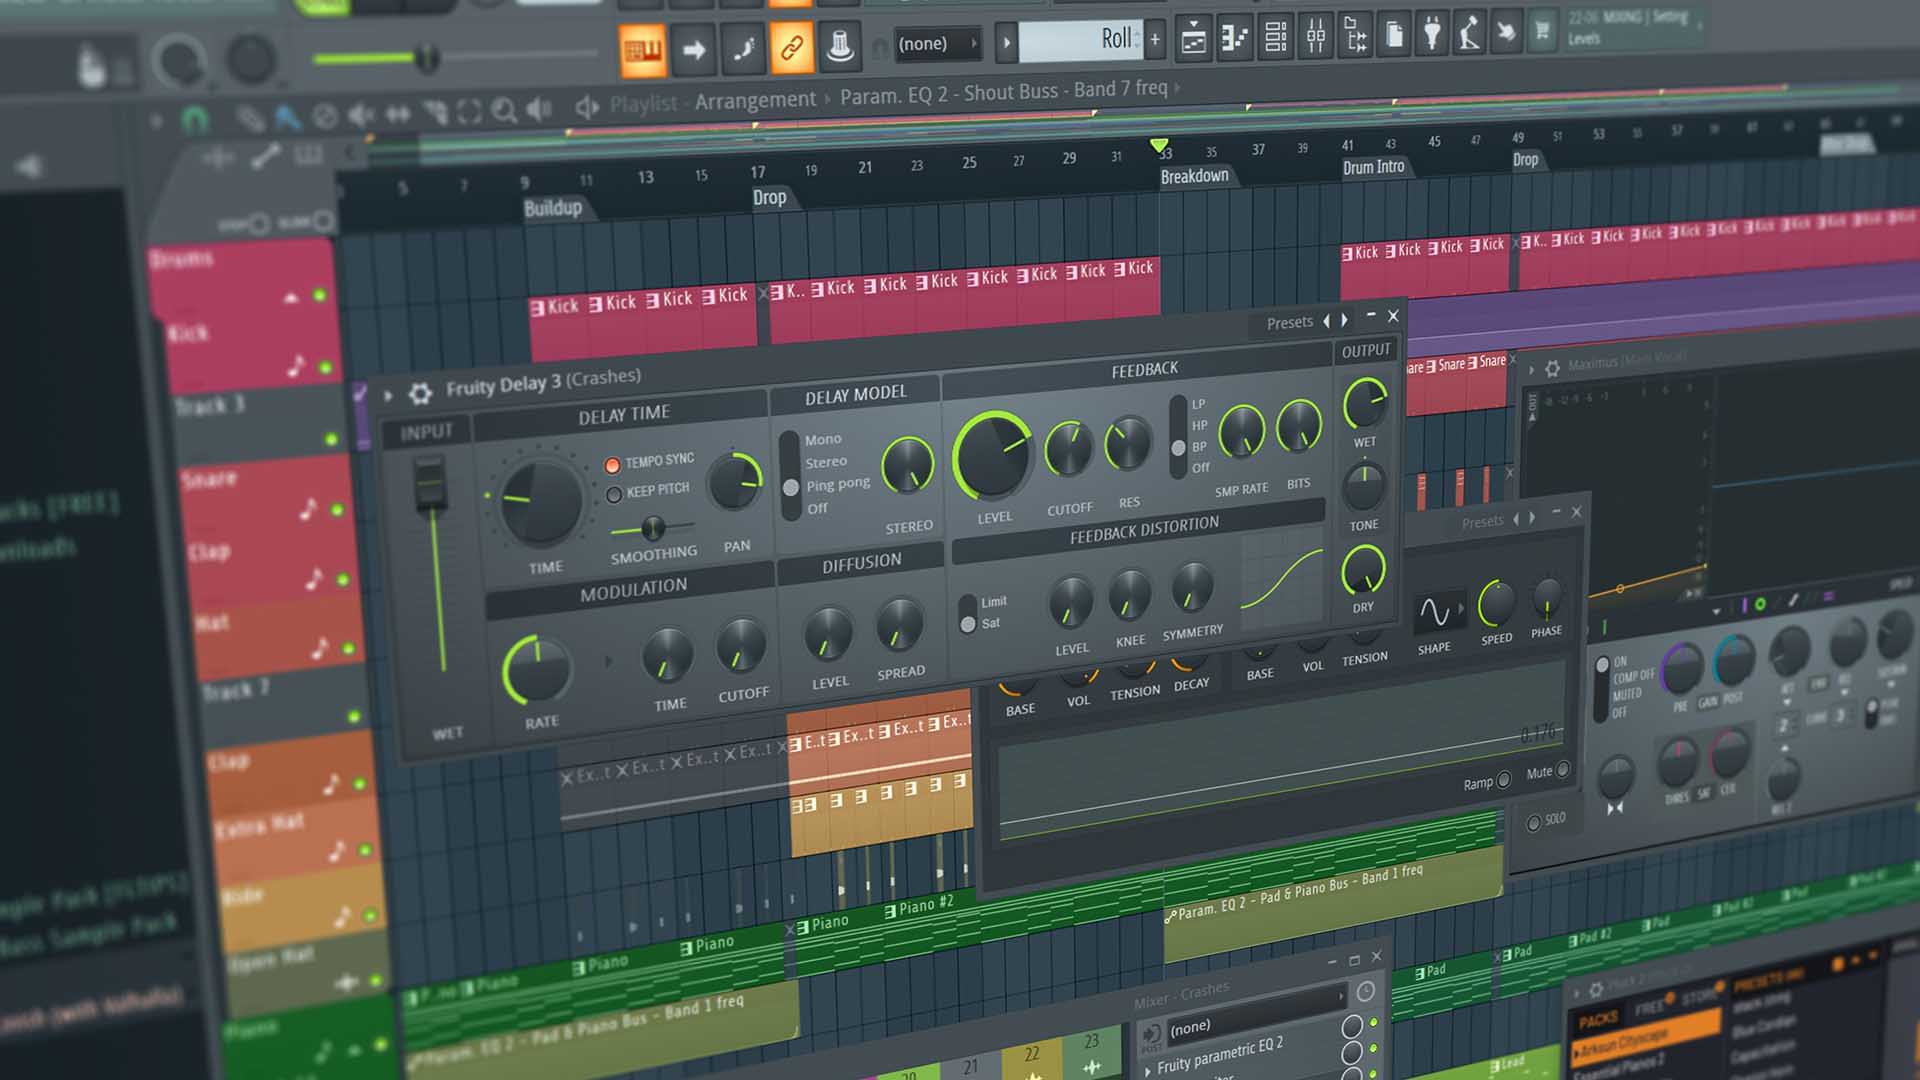 FL Studio Fruity Loops Free Intro Dubstep 